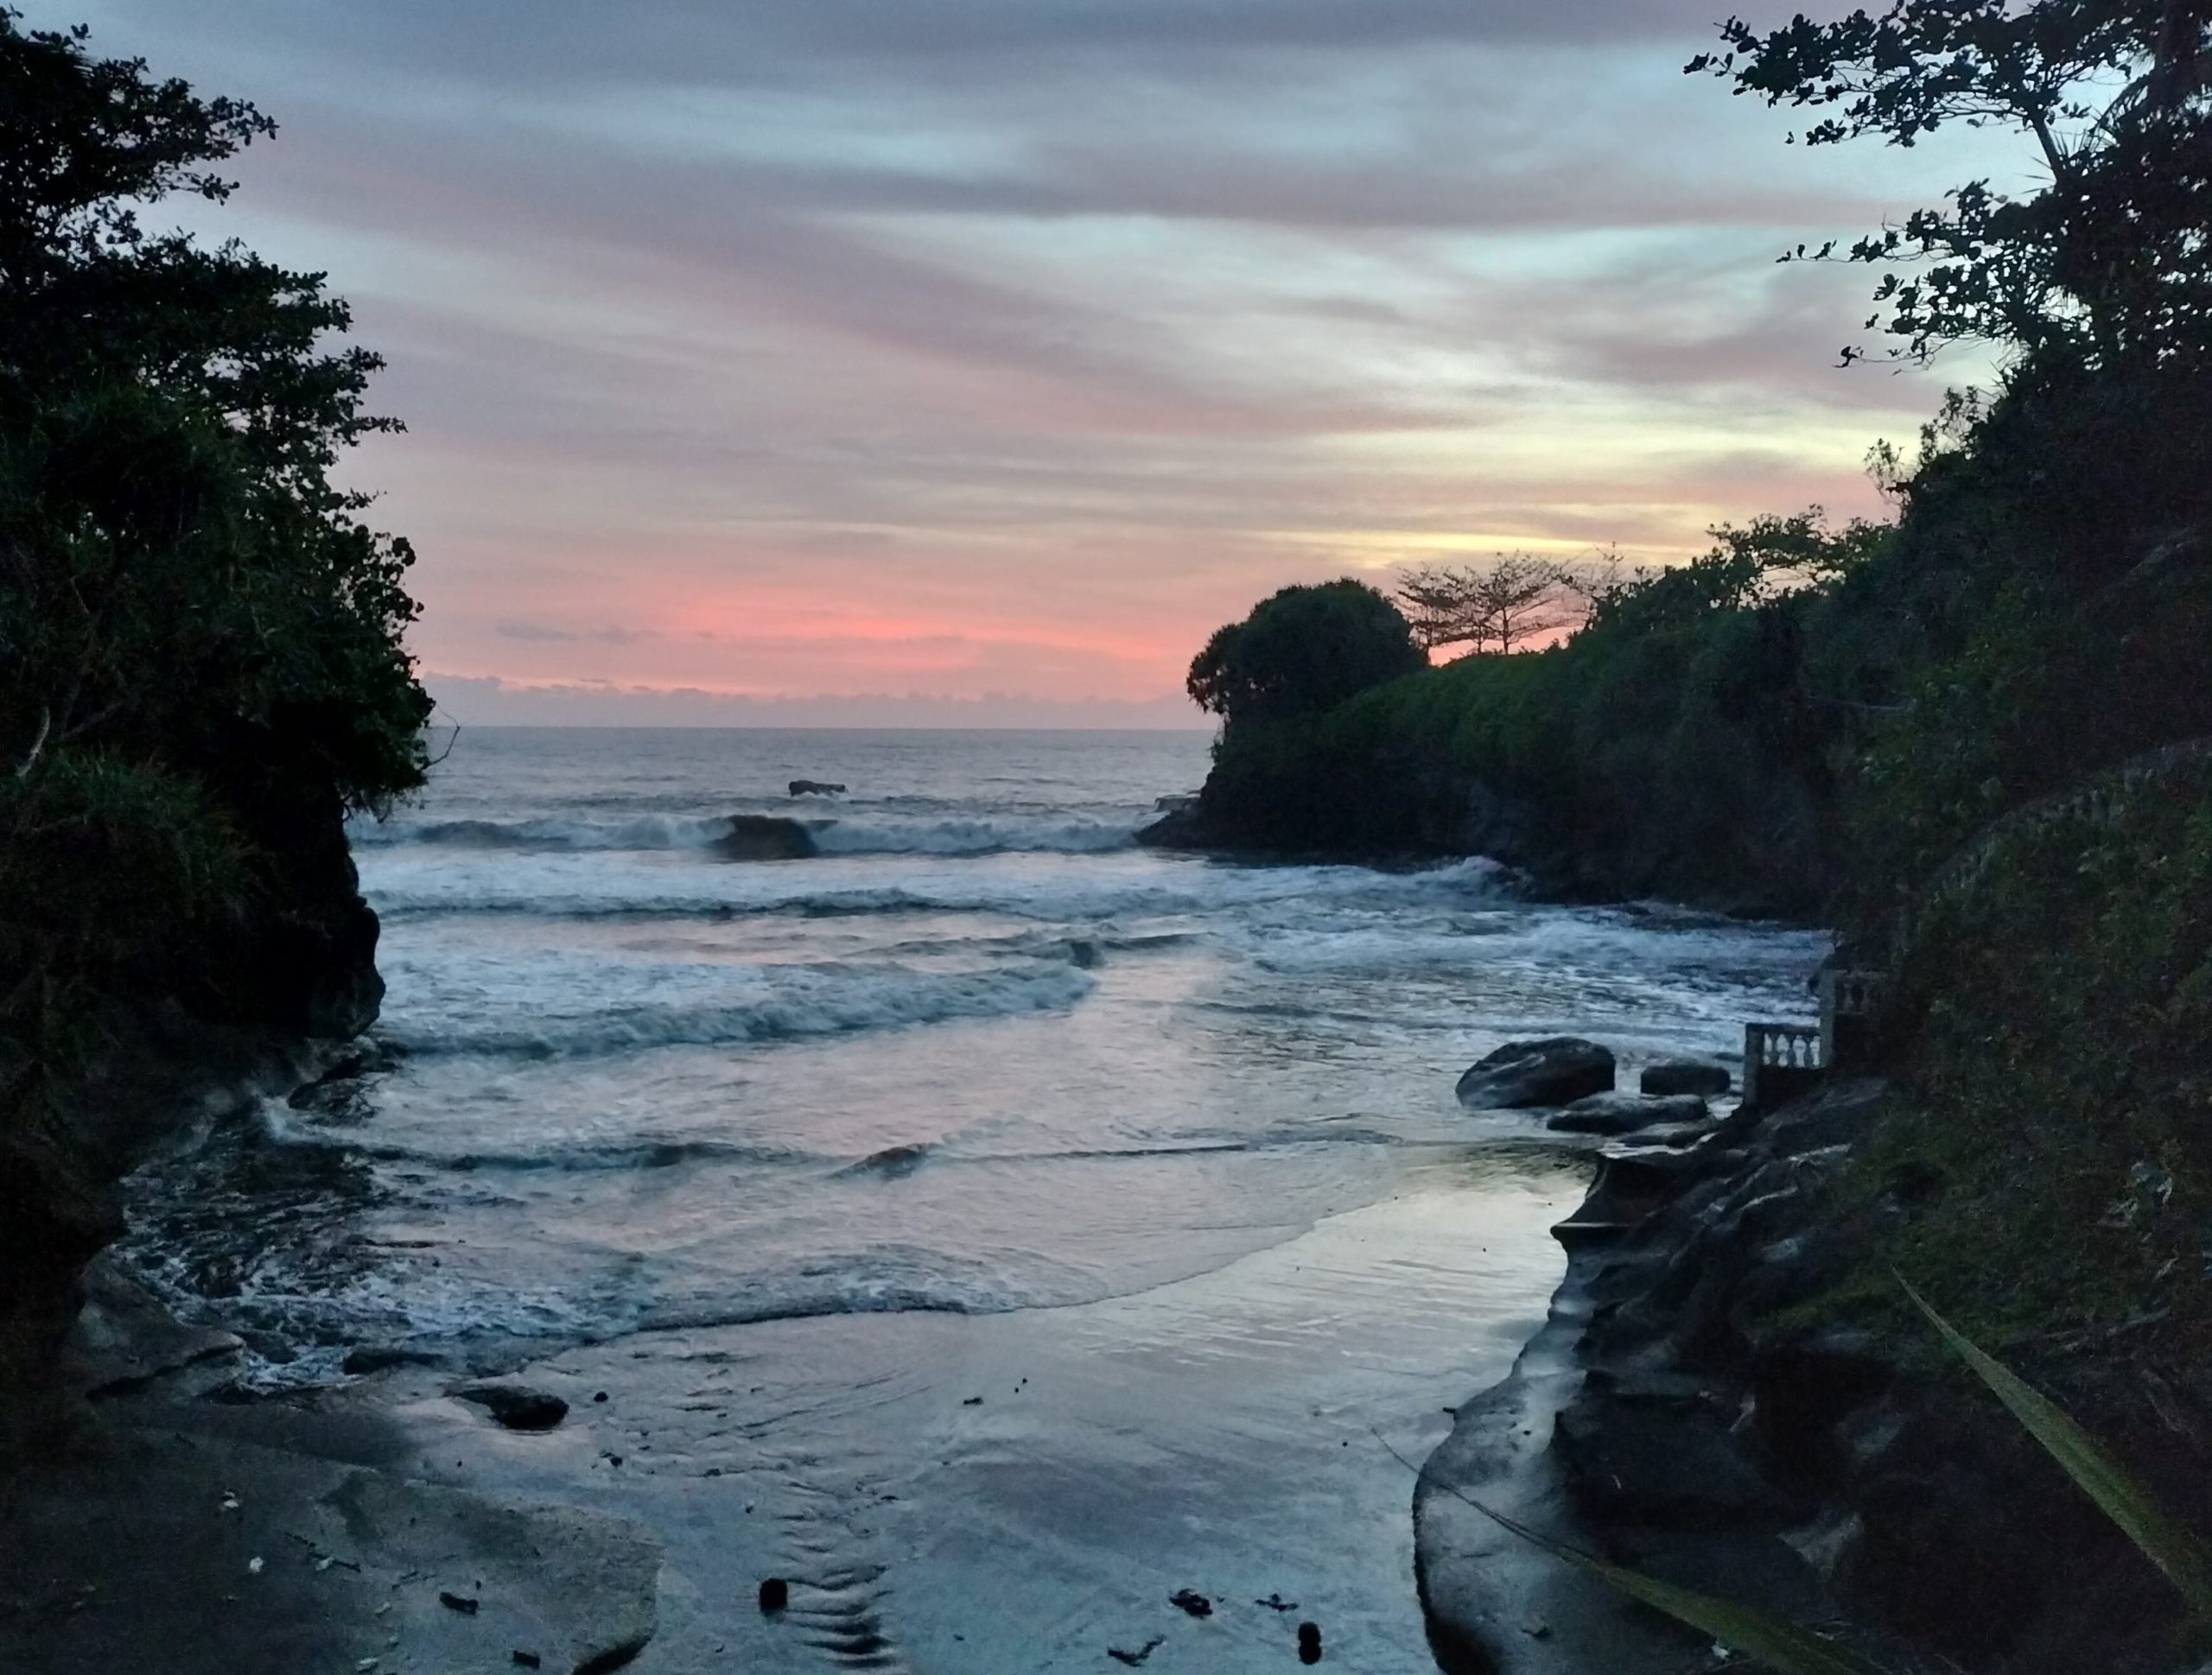 Sunset over a rocky cove in Balian, Bali.